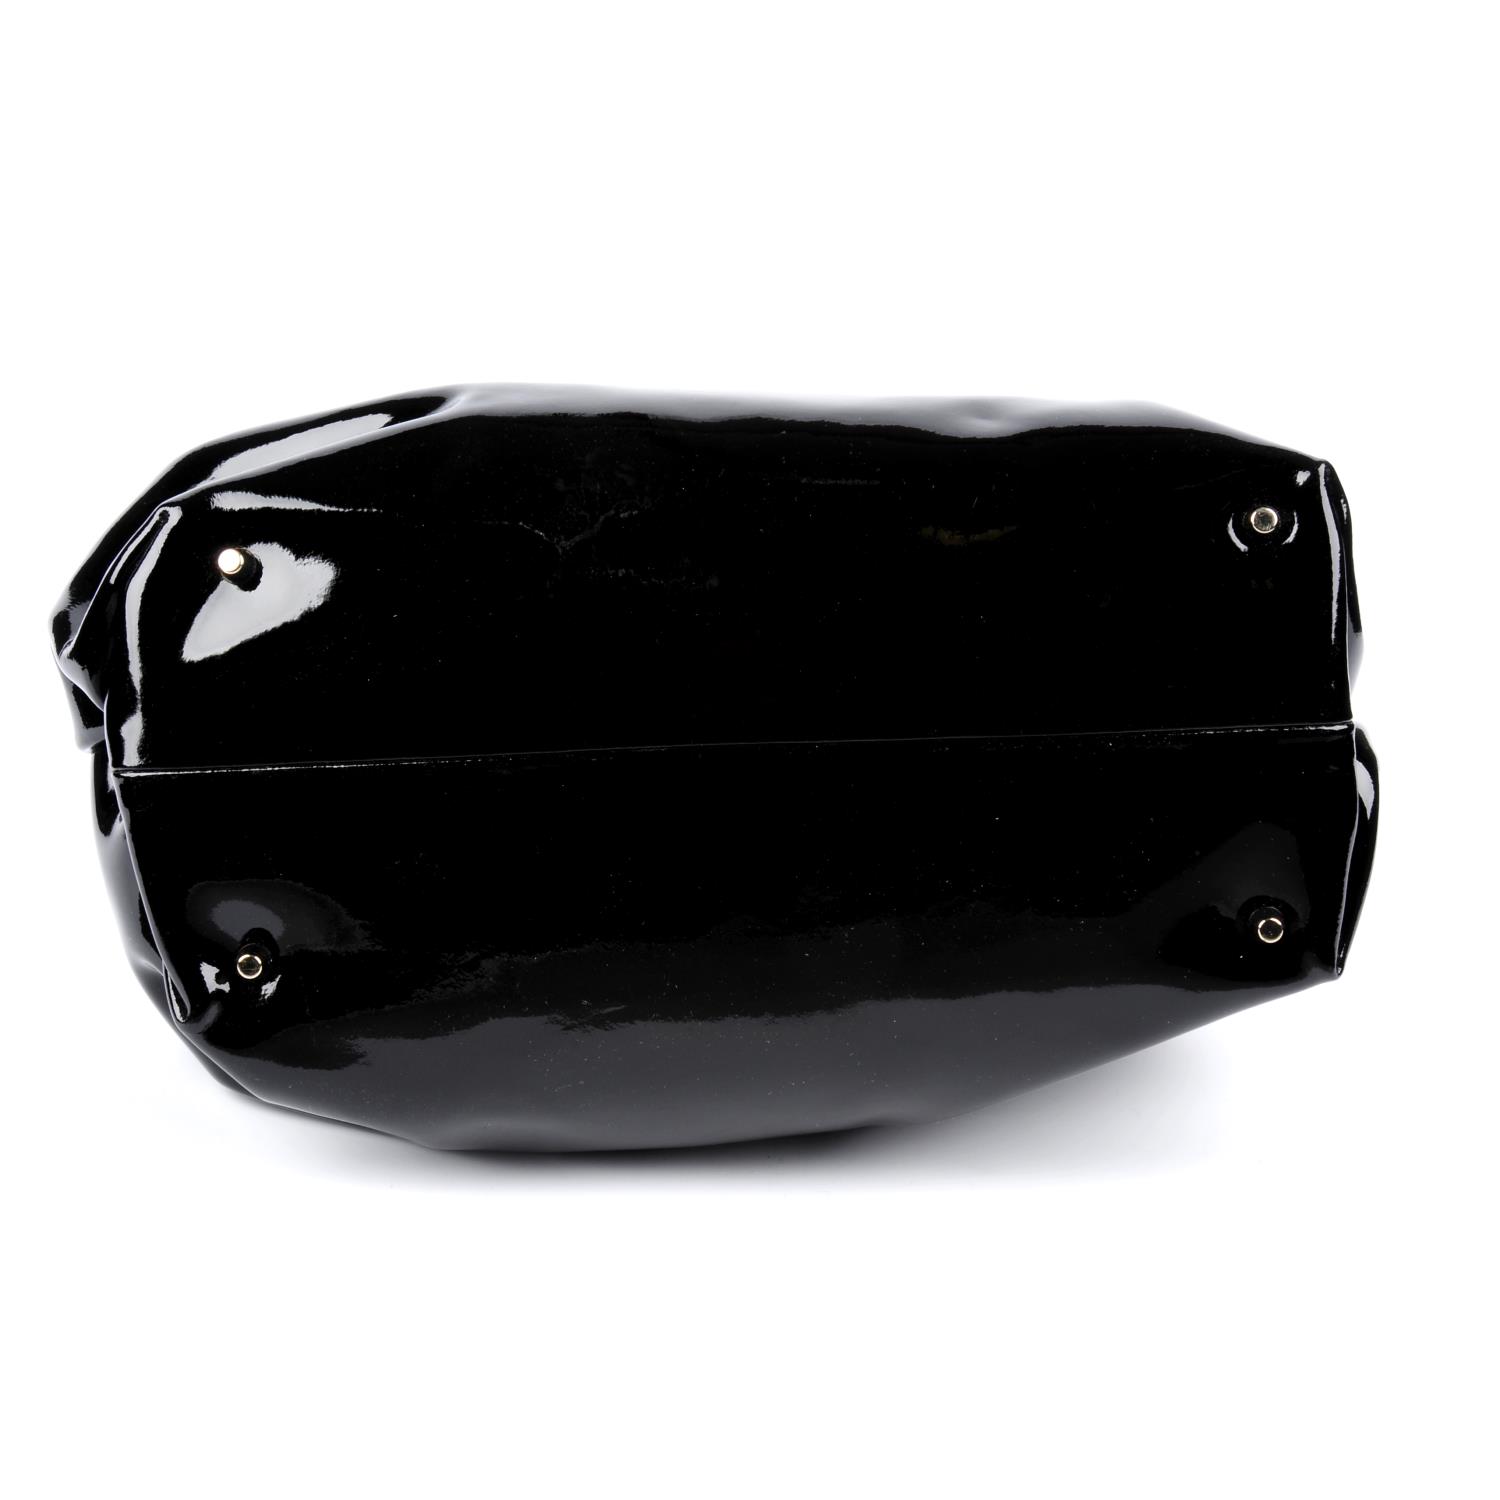 ASPINAL LONDON - a patent leather Barbarella handbag. - Image 4 of 4